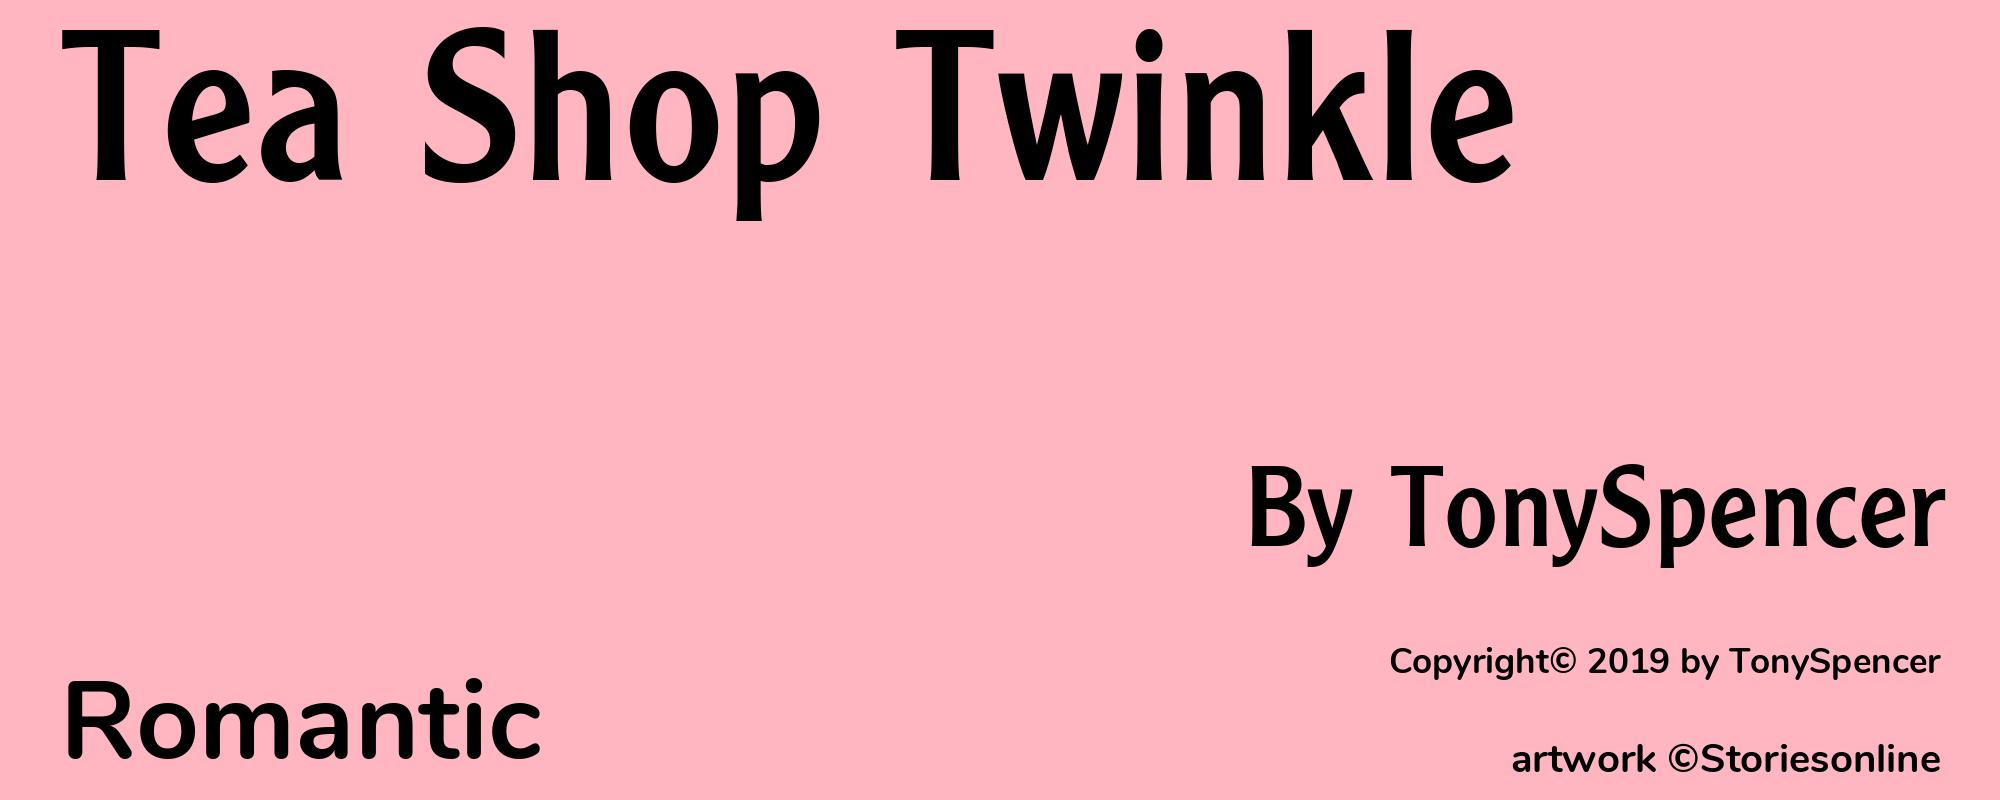 Tea Shop Twinkle - Cover